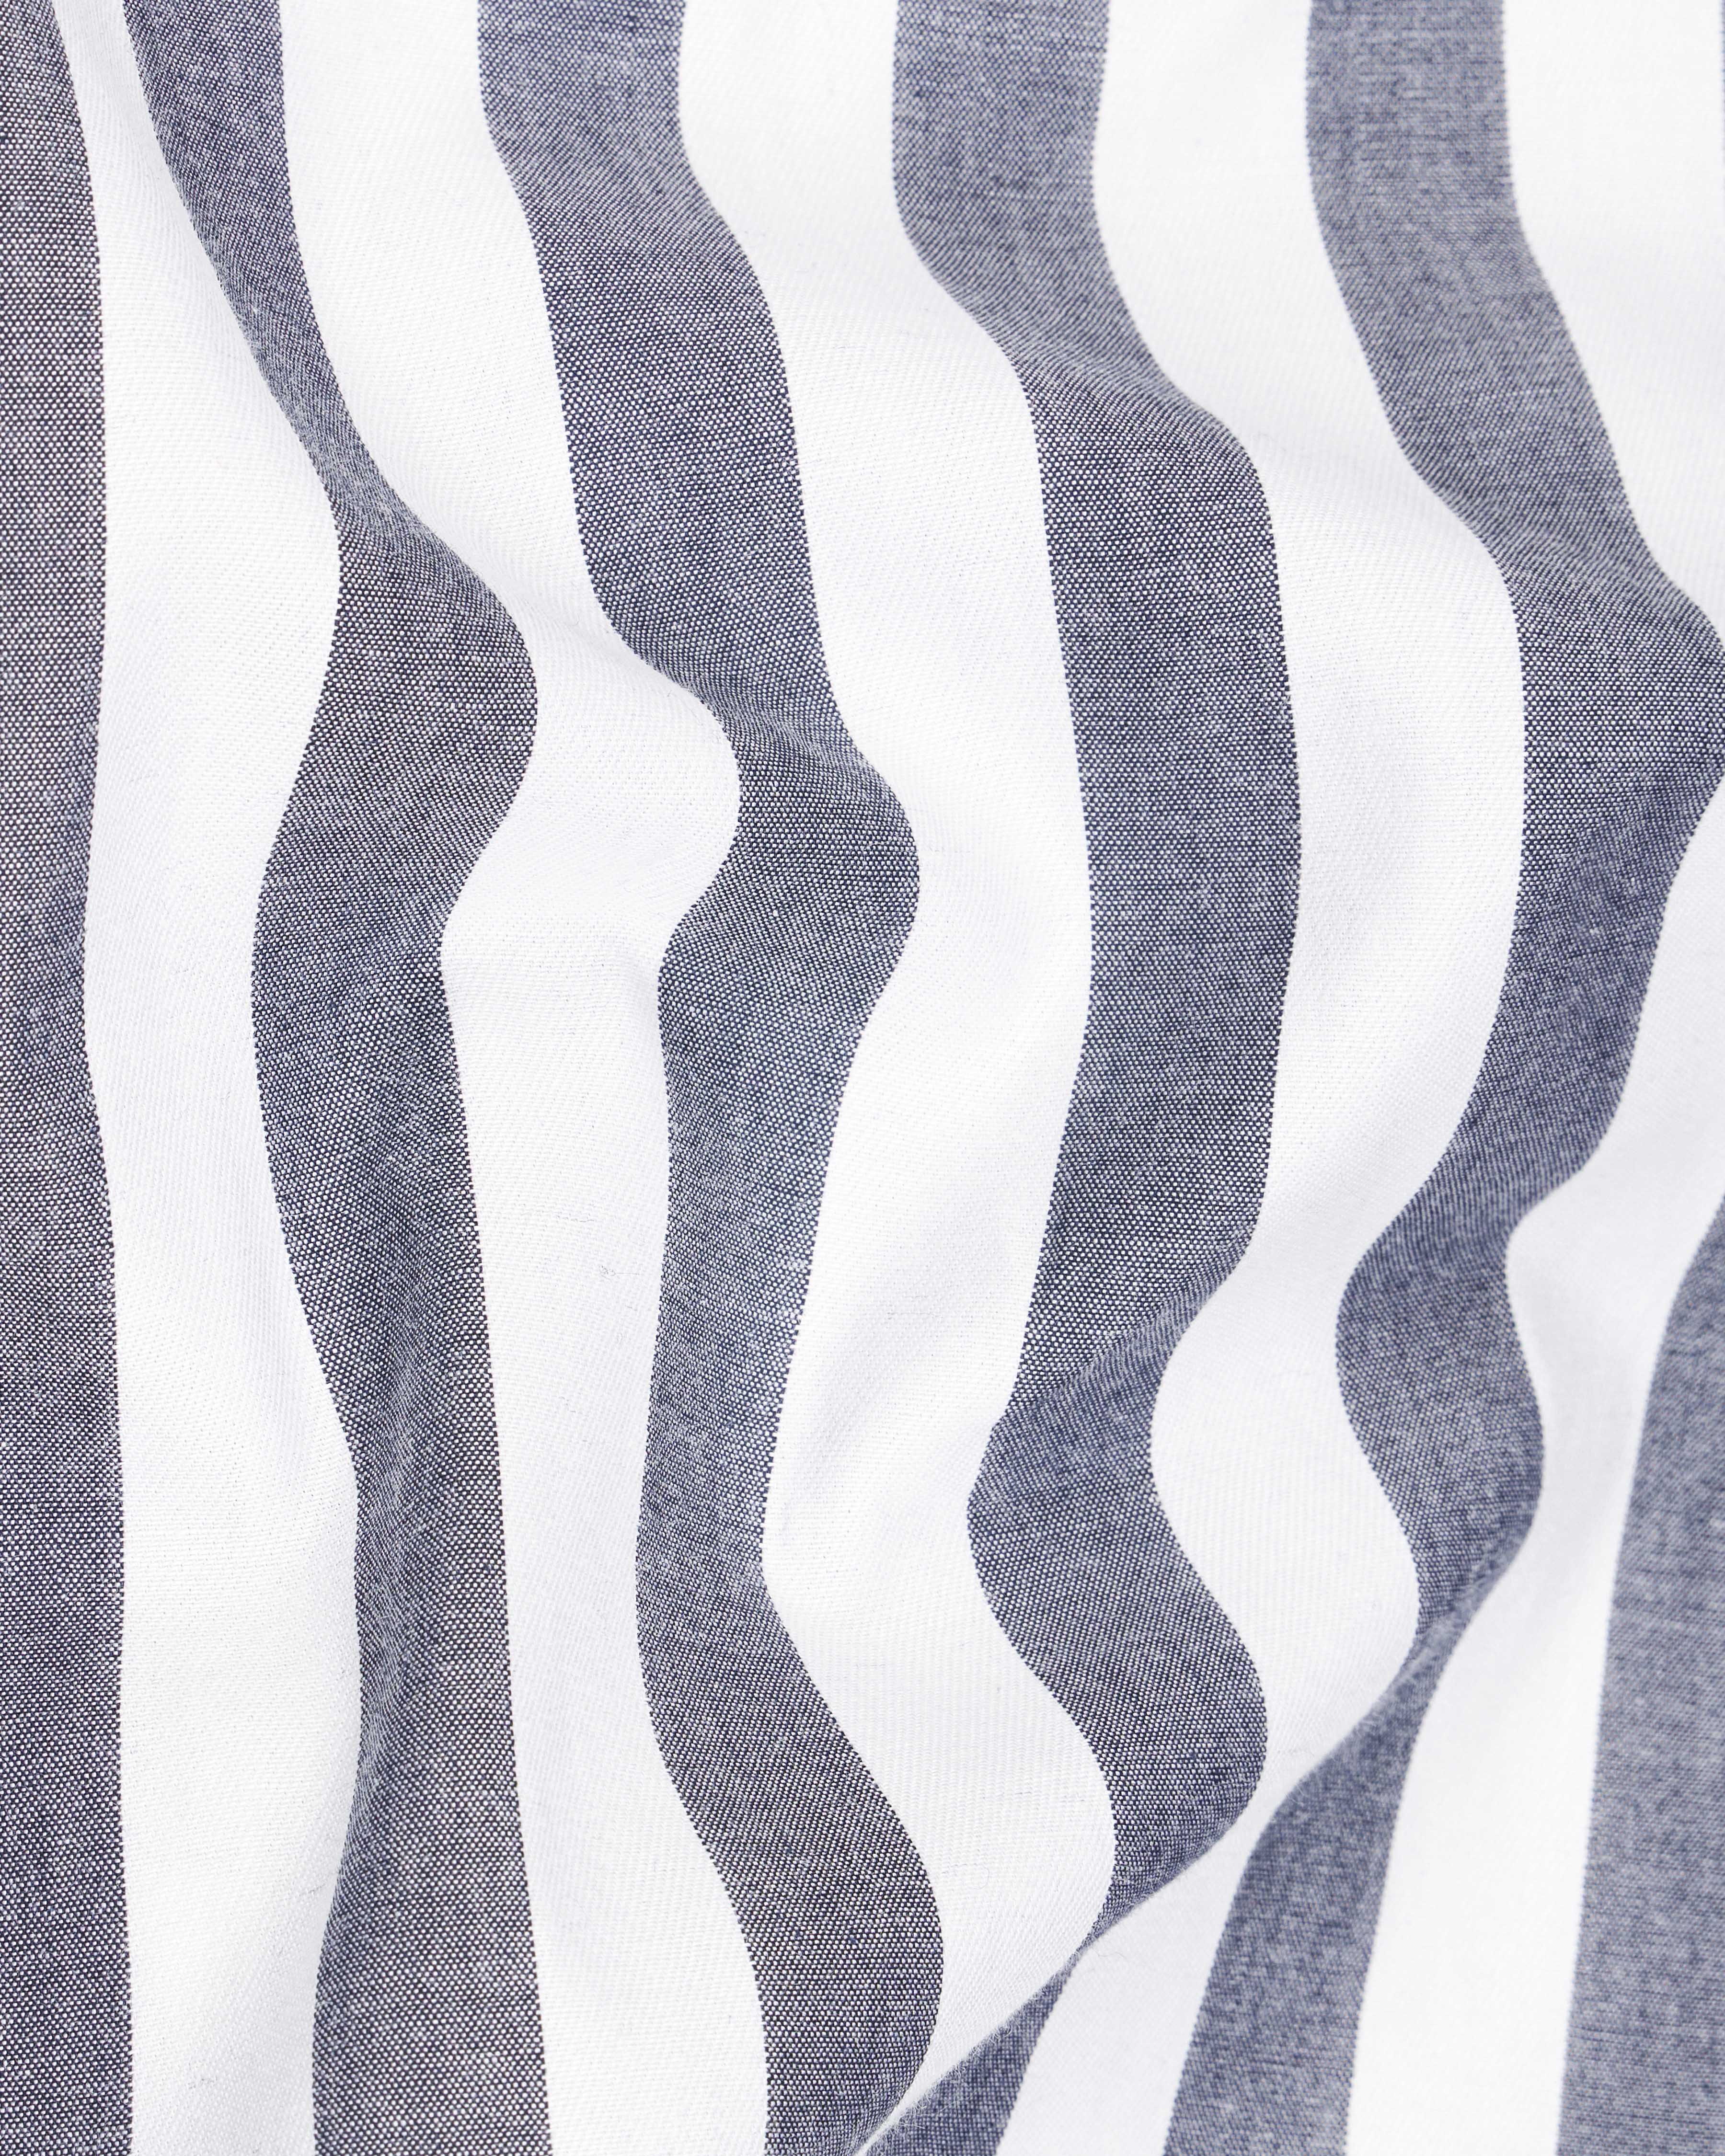  Bright White and Waterloo Gray Striped Premium Cotton Shirt 8768-CC-SS-38, 8768-CC-SS-39, 8768-CC-SS-40, 8768-CC-SS-42, 8768-CC-SS-44, 8768-CC-SS-46, 8768-CC-SS-48, 8768-CC-SS-50, 8768-CC-SS-52